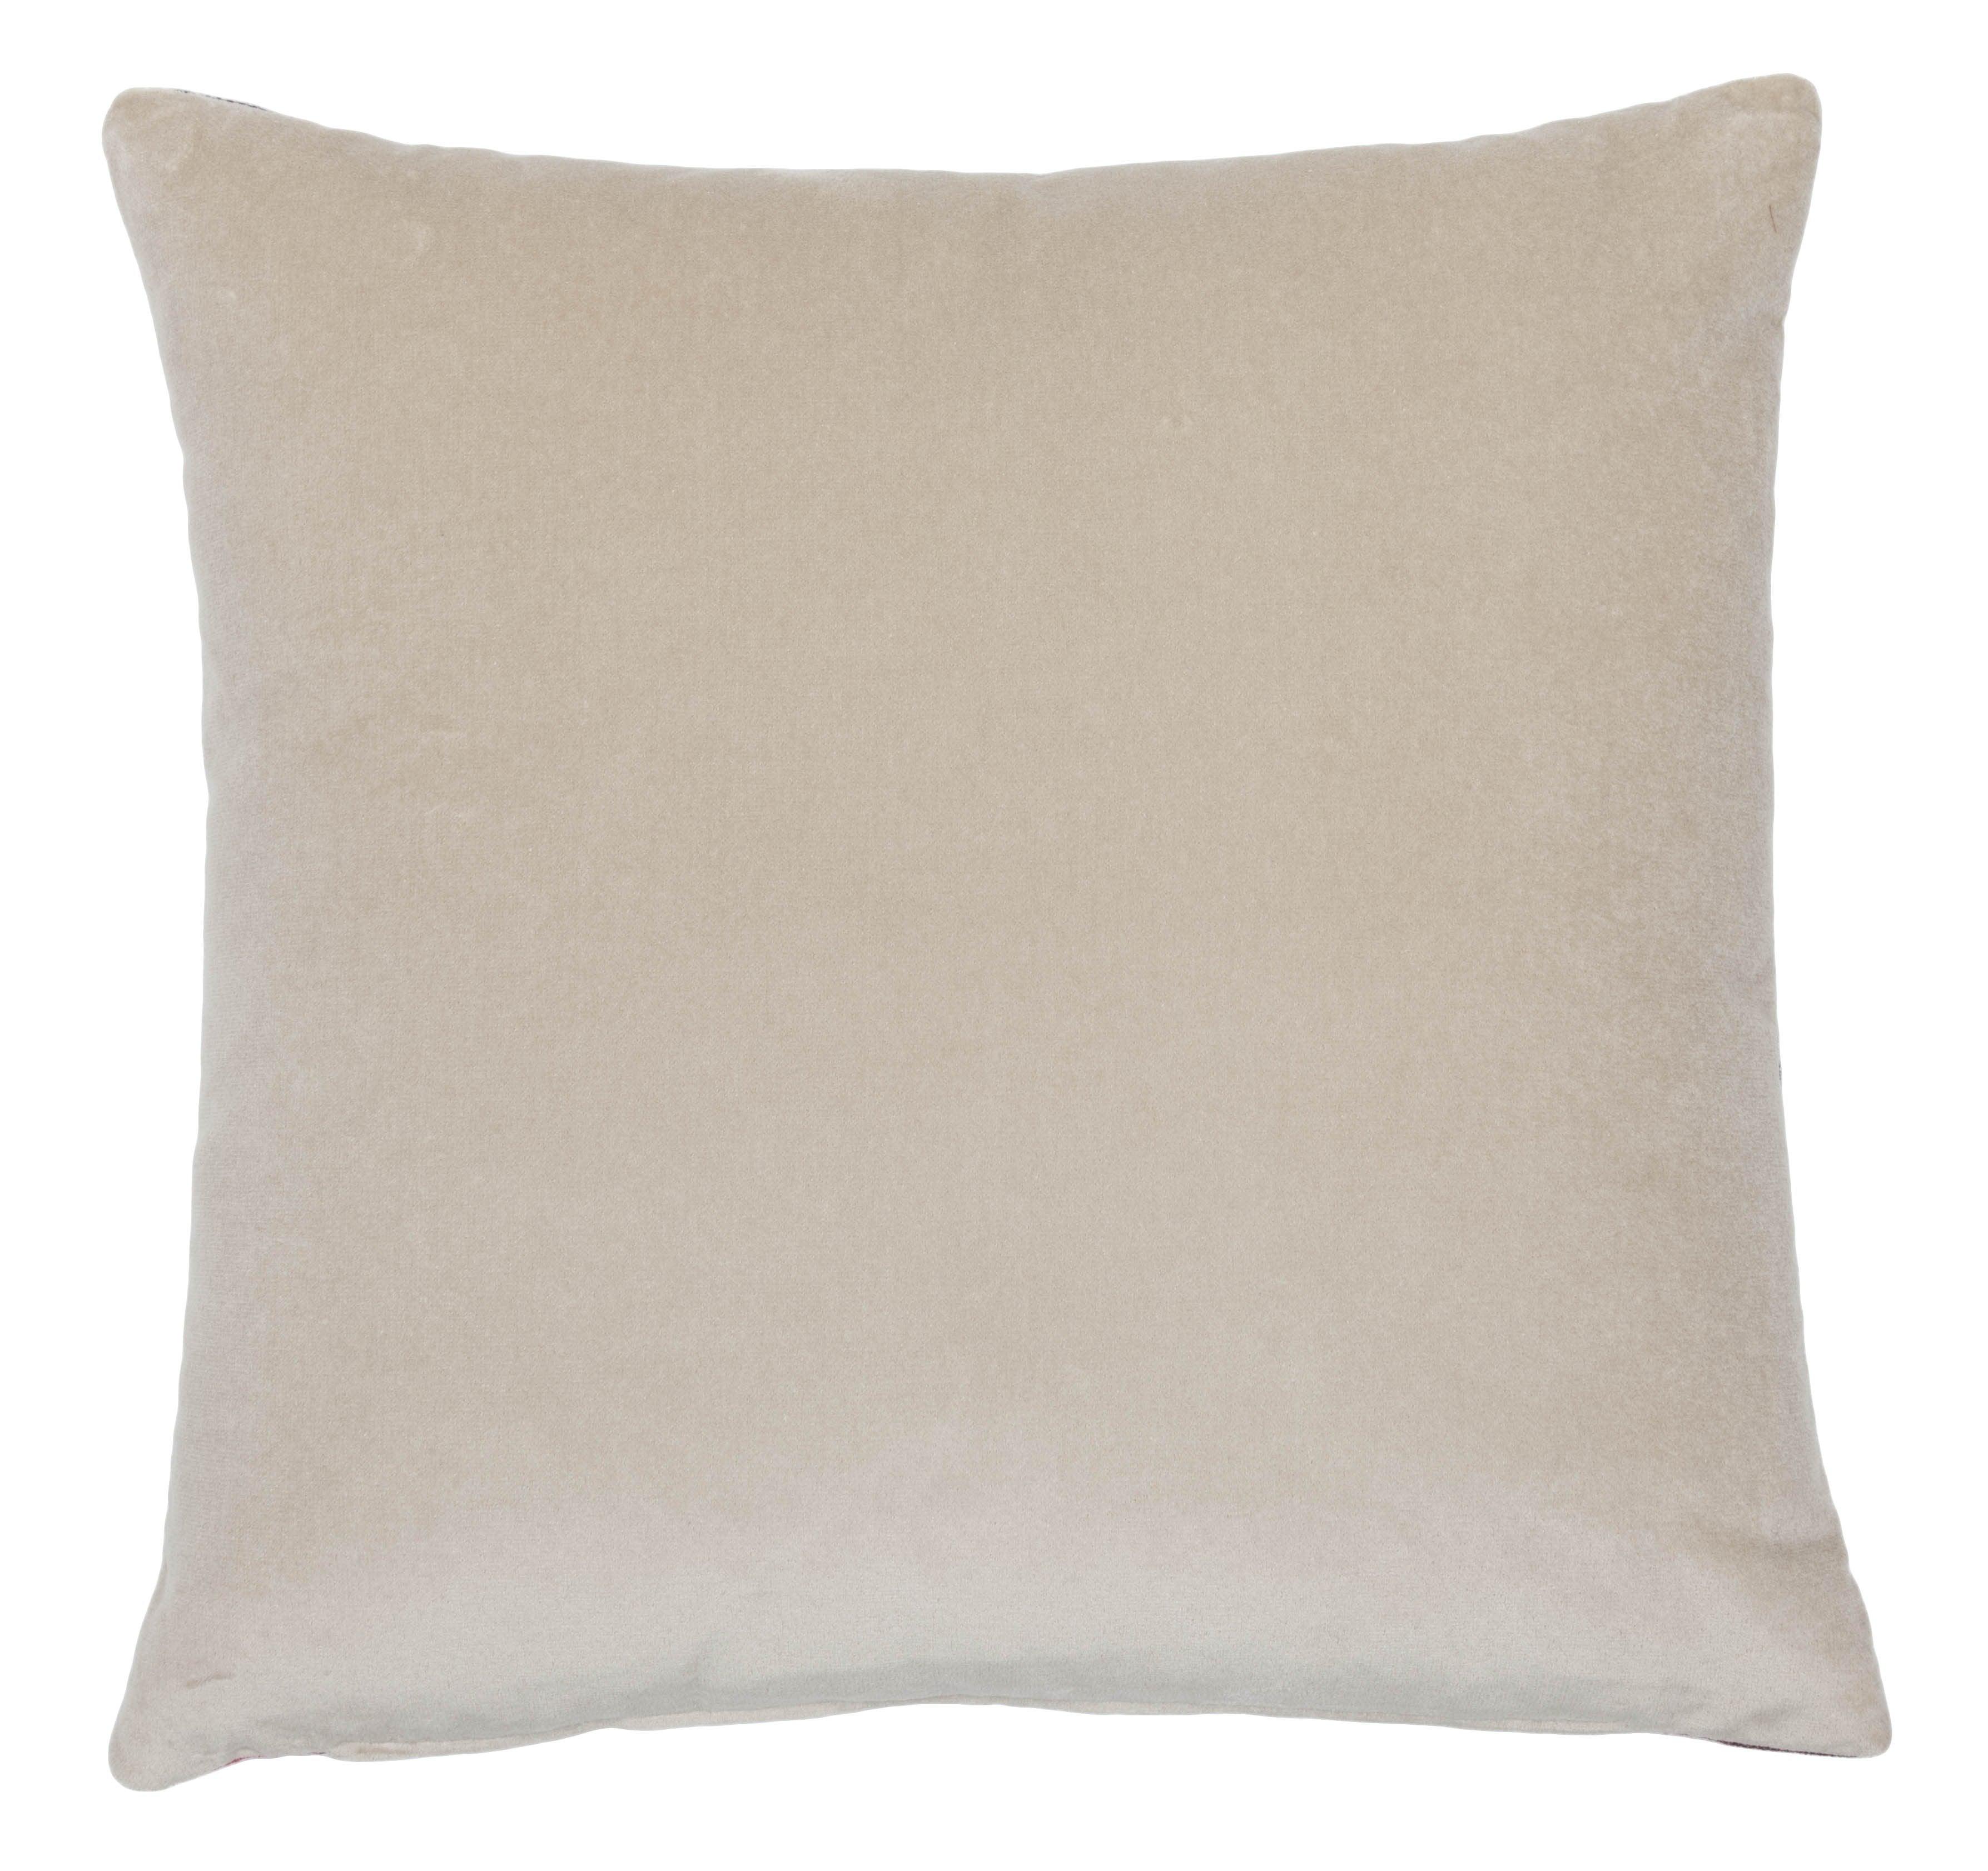 William Morris Pillow, Soft Color Pillow, Floral Throw Pillow